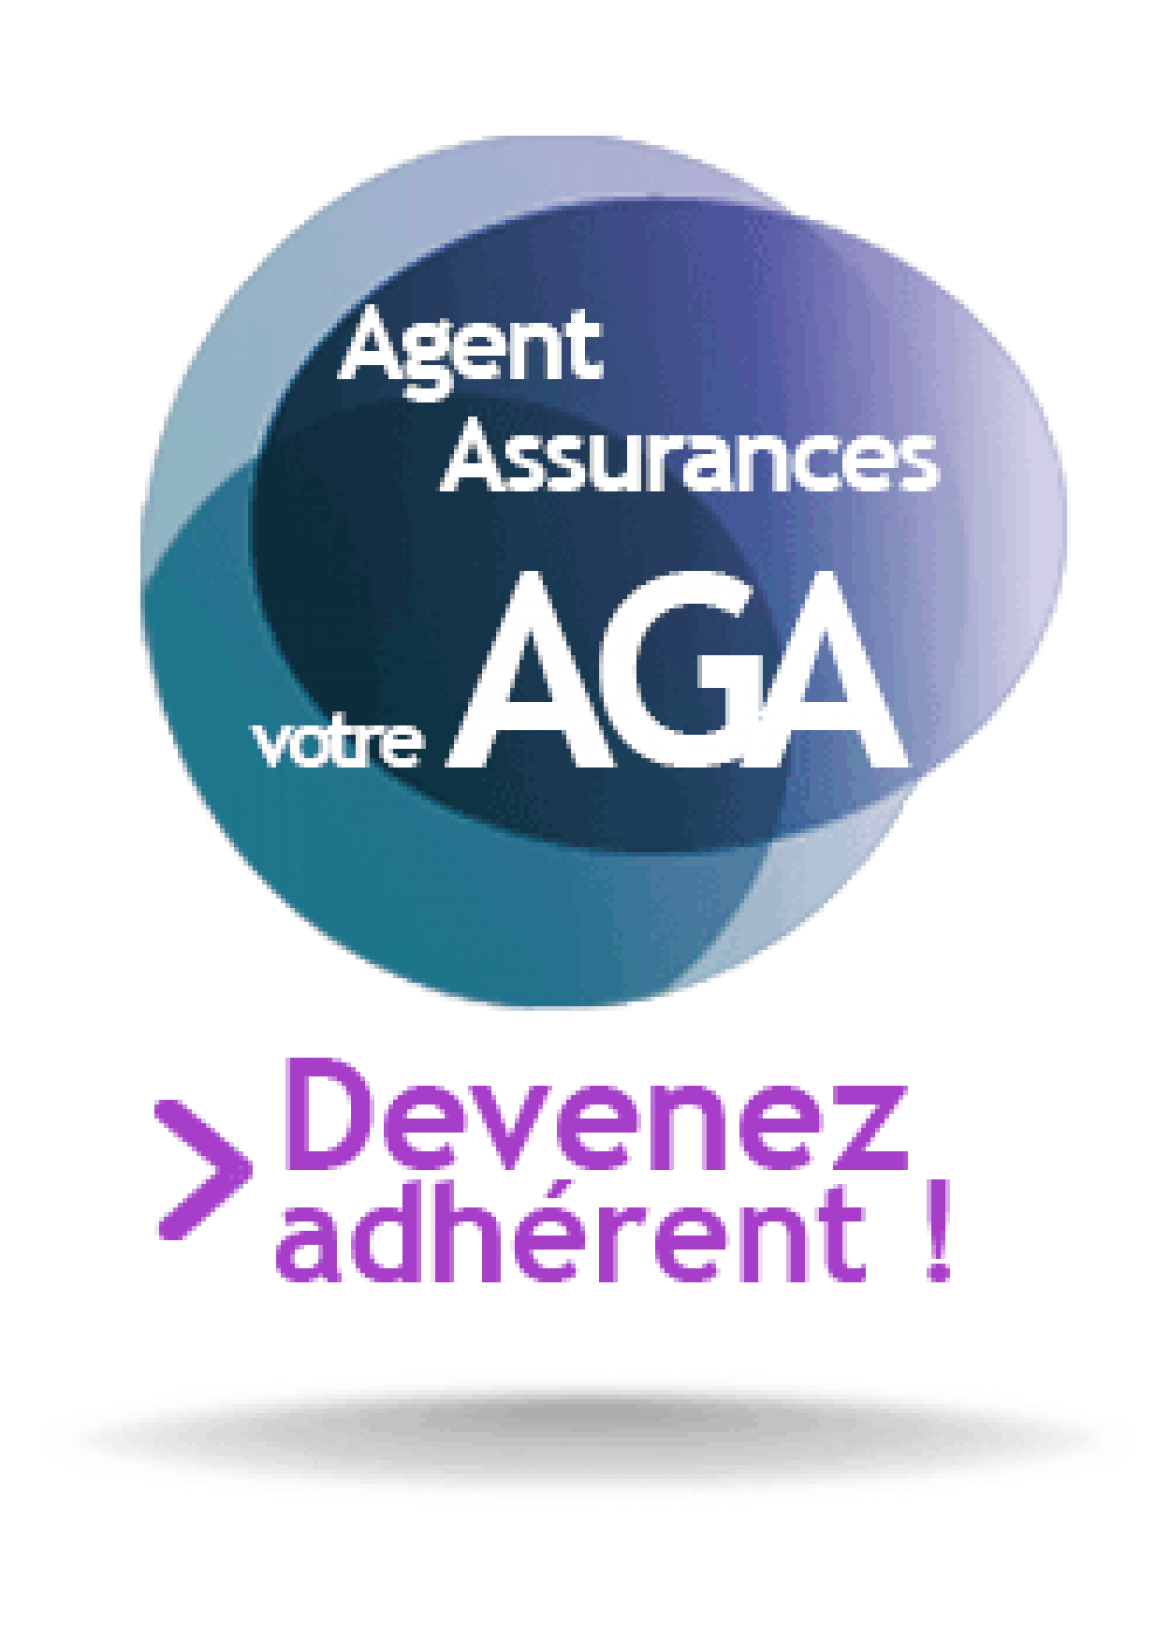 AGA Agent Assurances